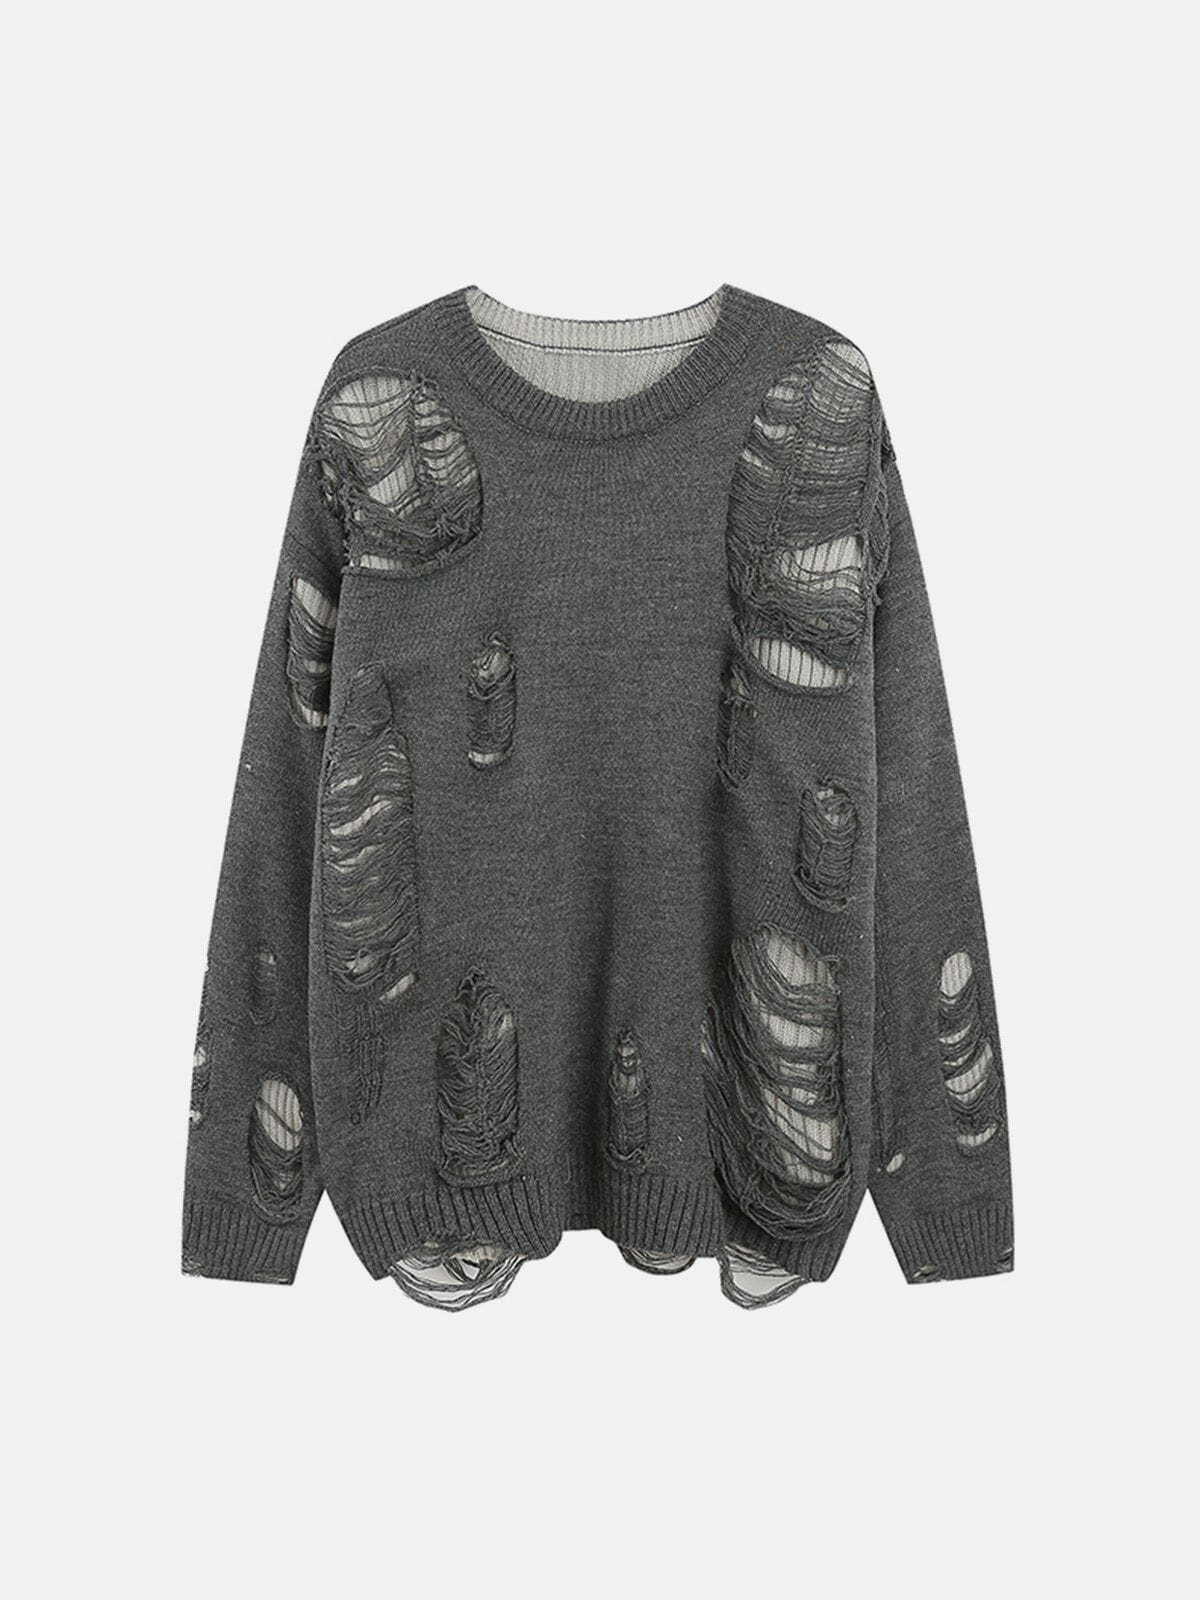 twotone mesh sleeve sweater urban edgy statement 8765